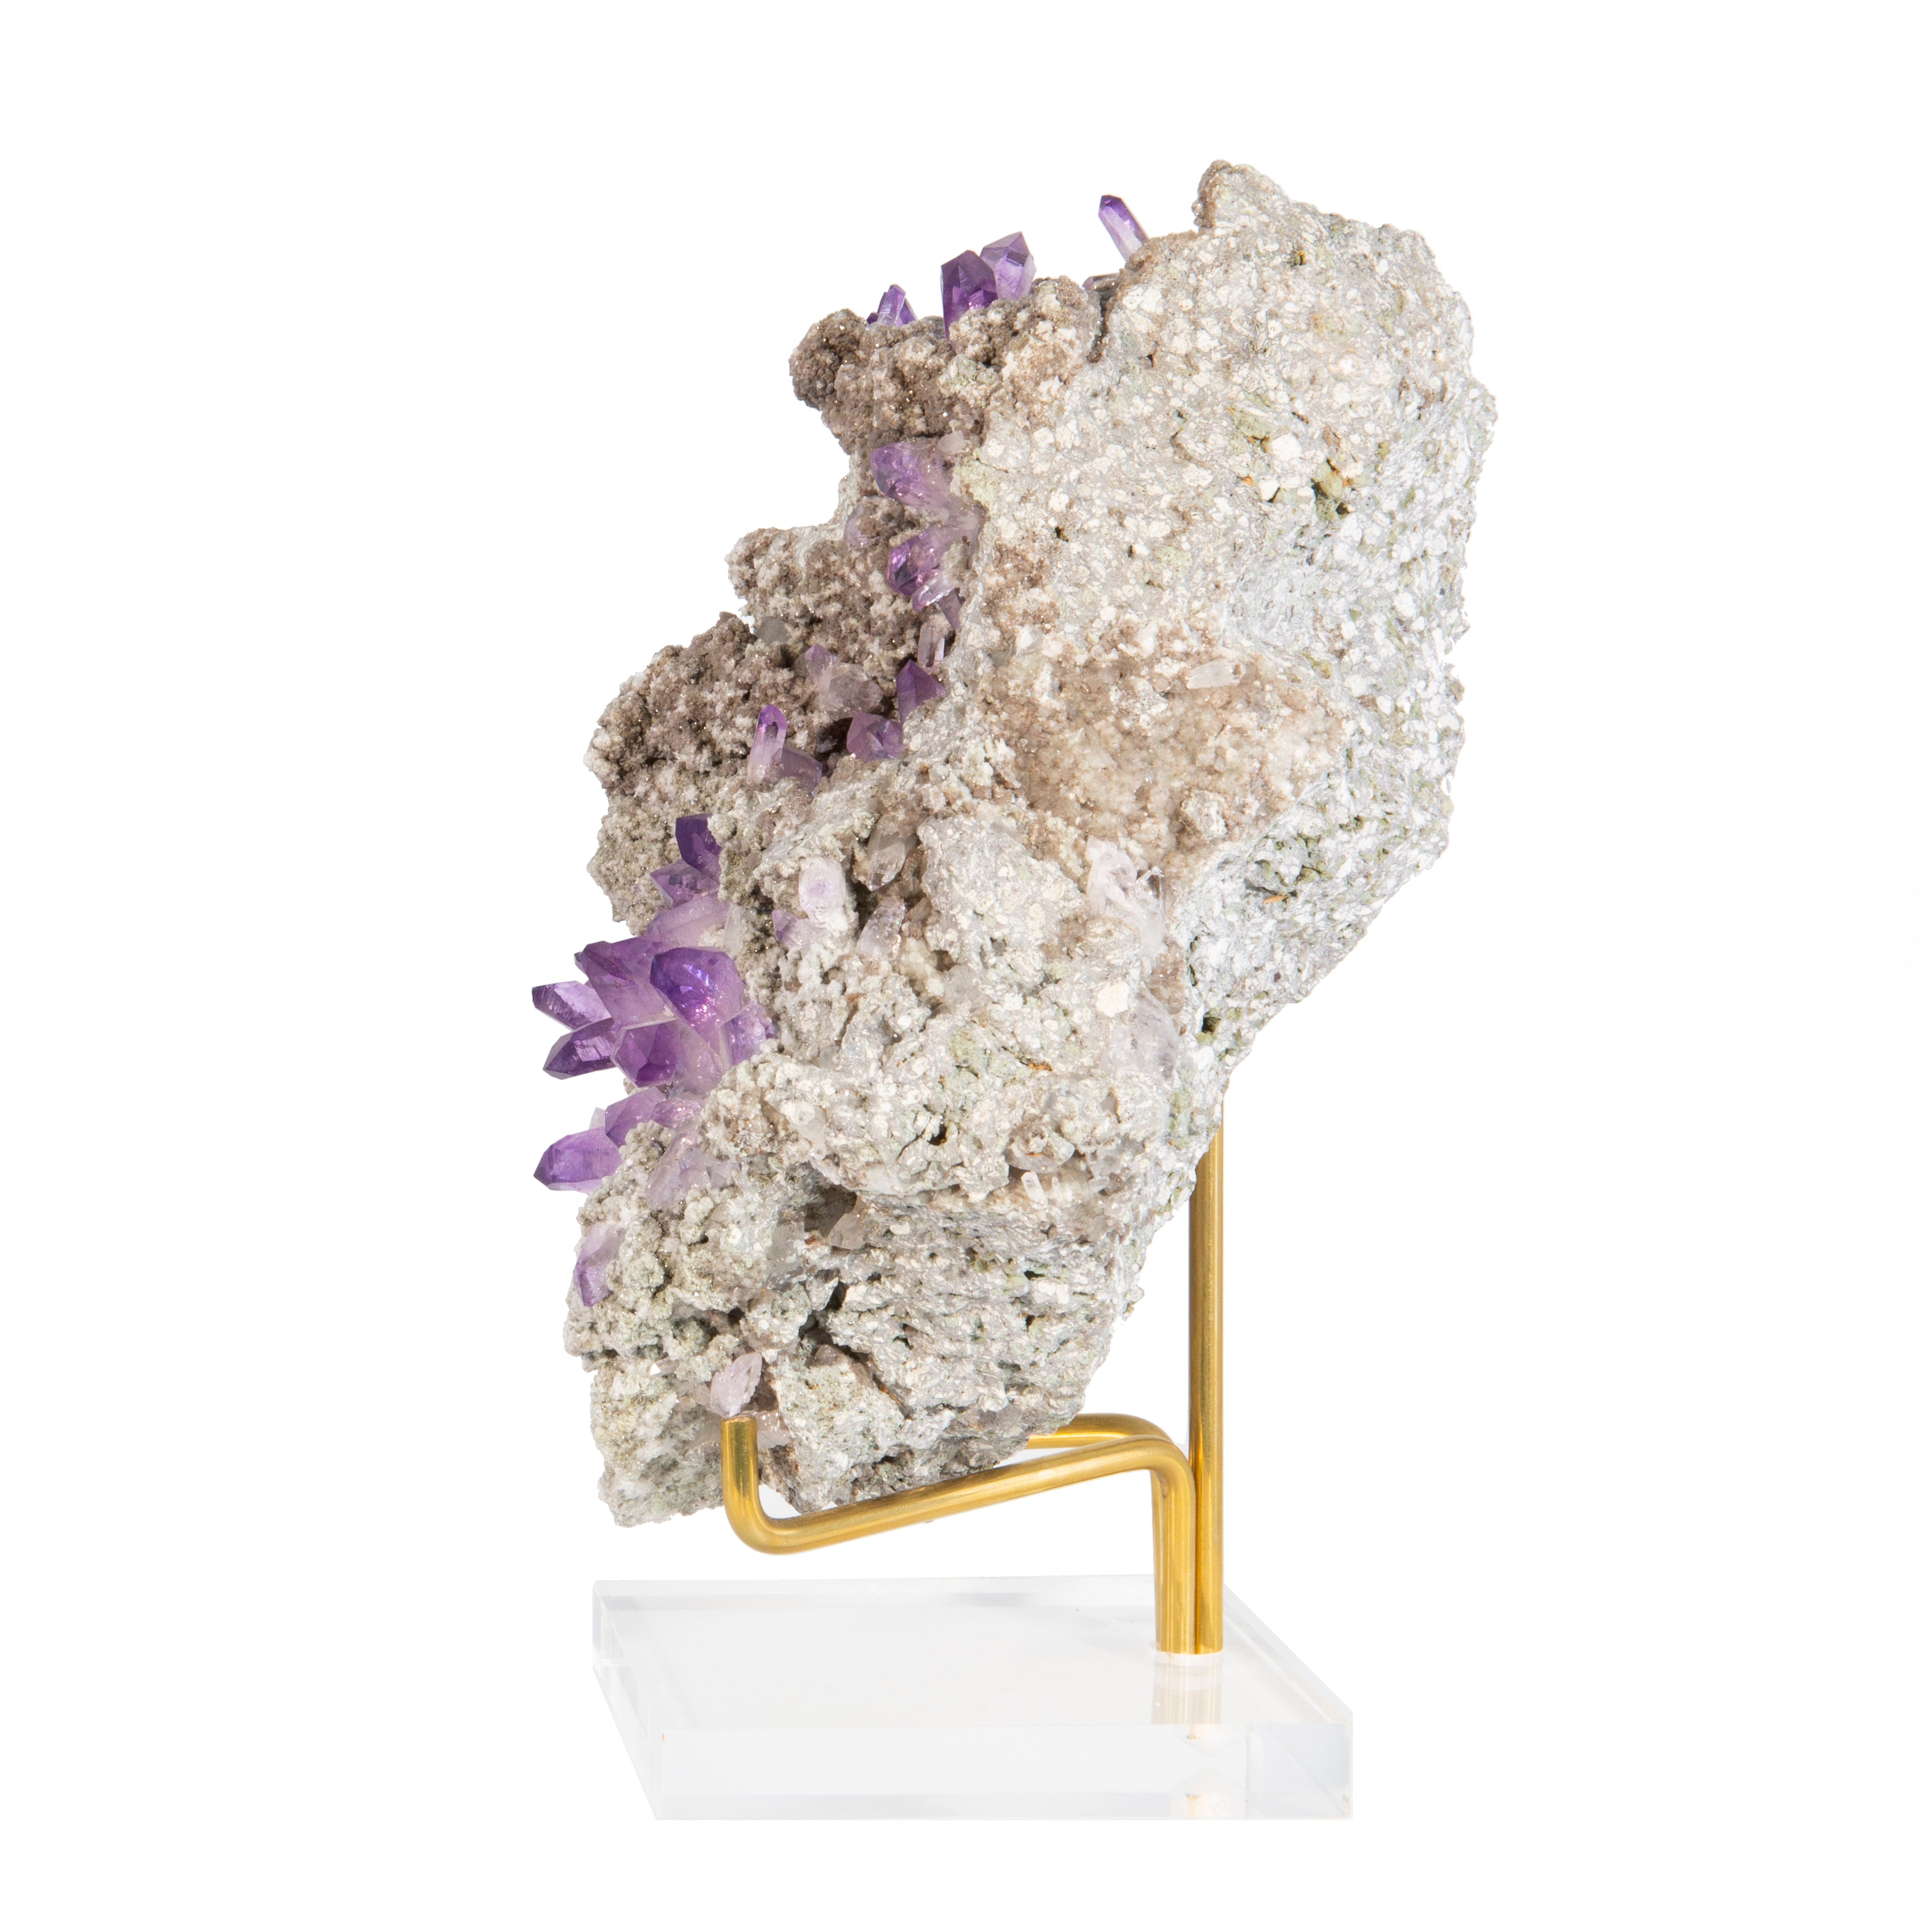 Amethyst on Matrix 4.42lb 7.75 inch Natural Crystal Cluster - Veracruz, Mexico - VX-401 - Crystalarium